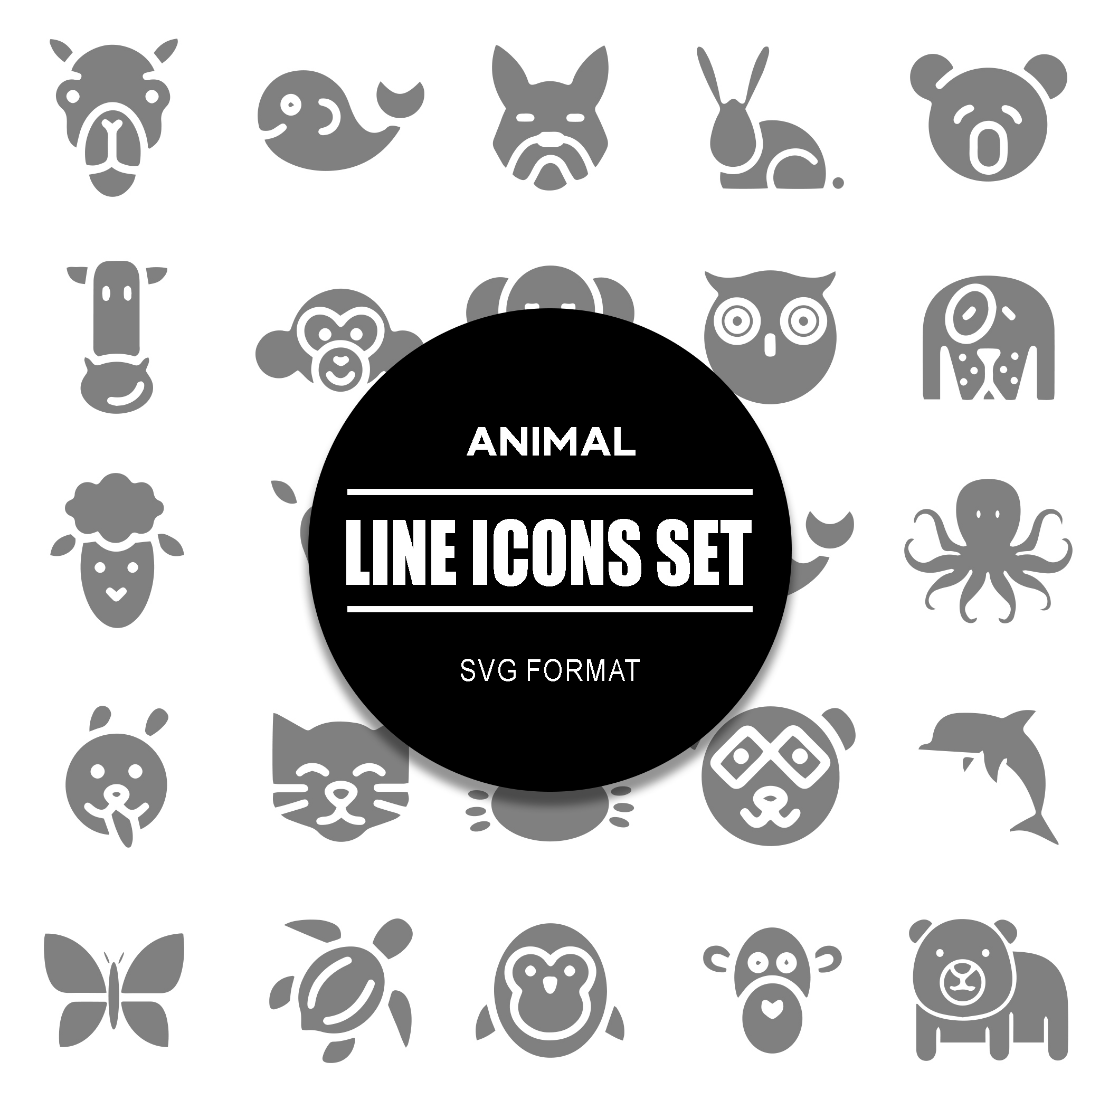 Animal Icon Set cover image.